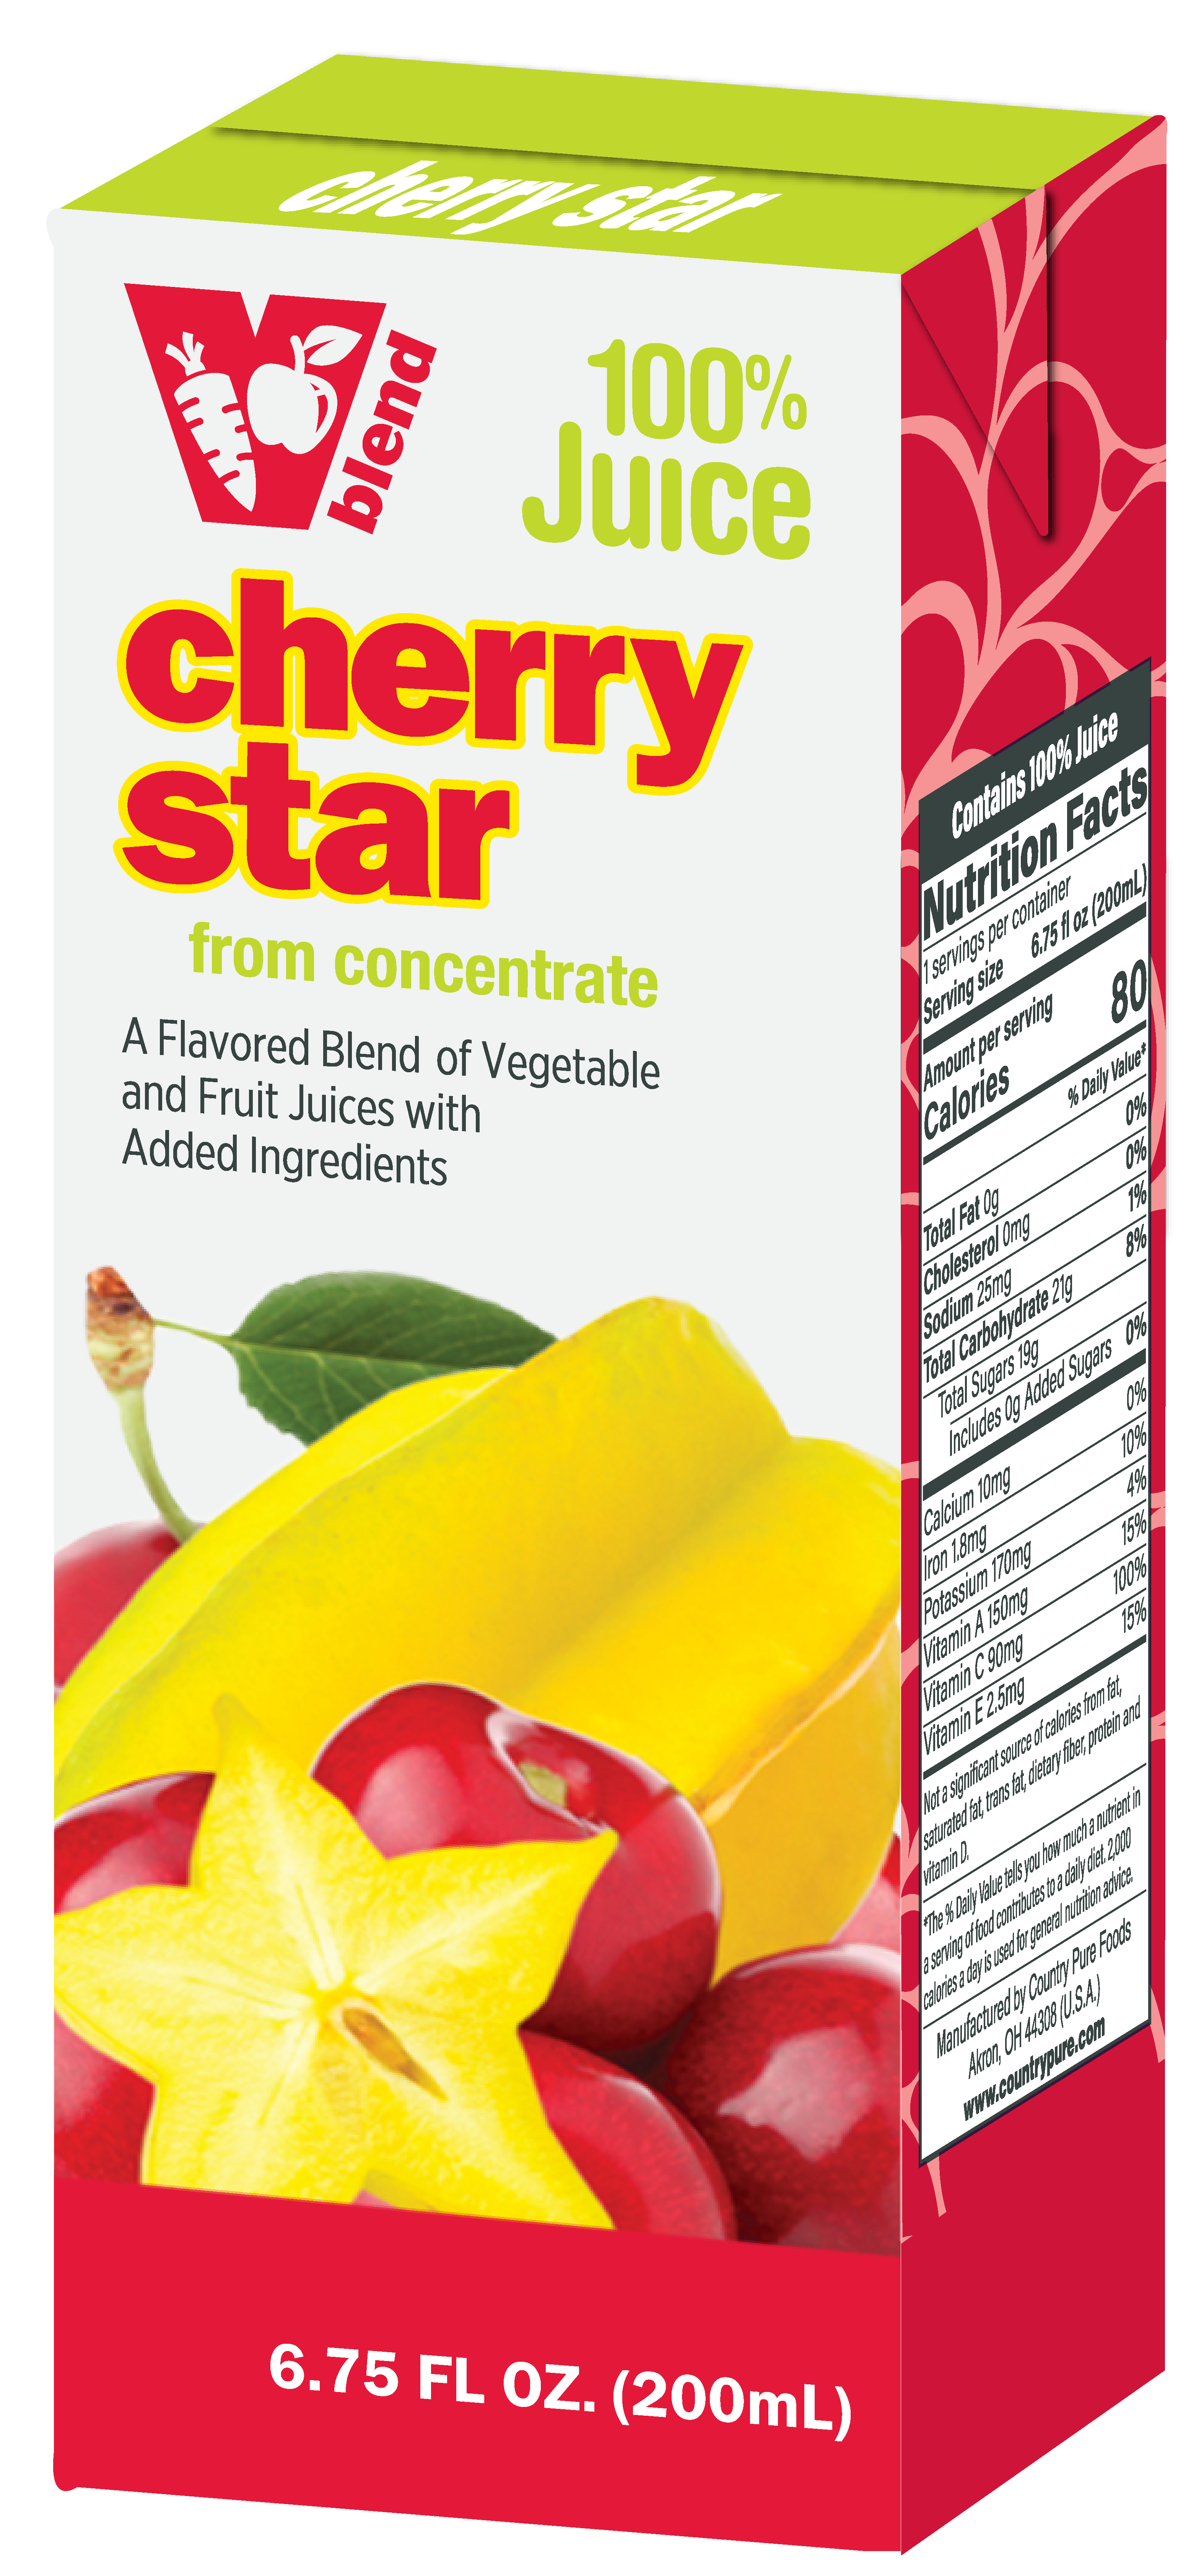 VBlend Cherry Star Juice Box